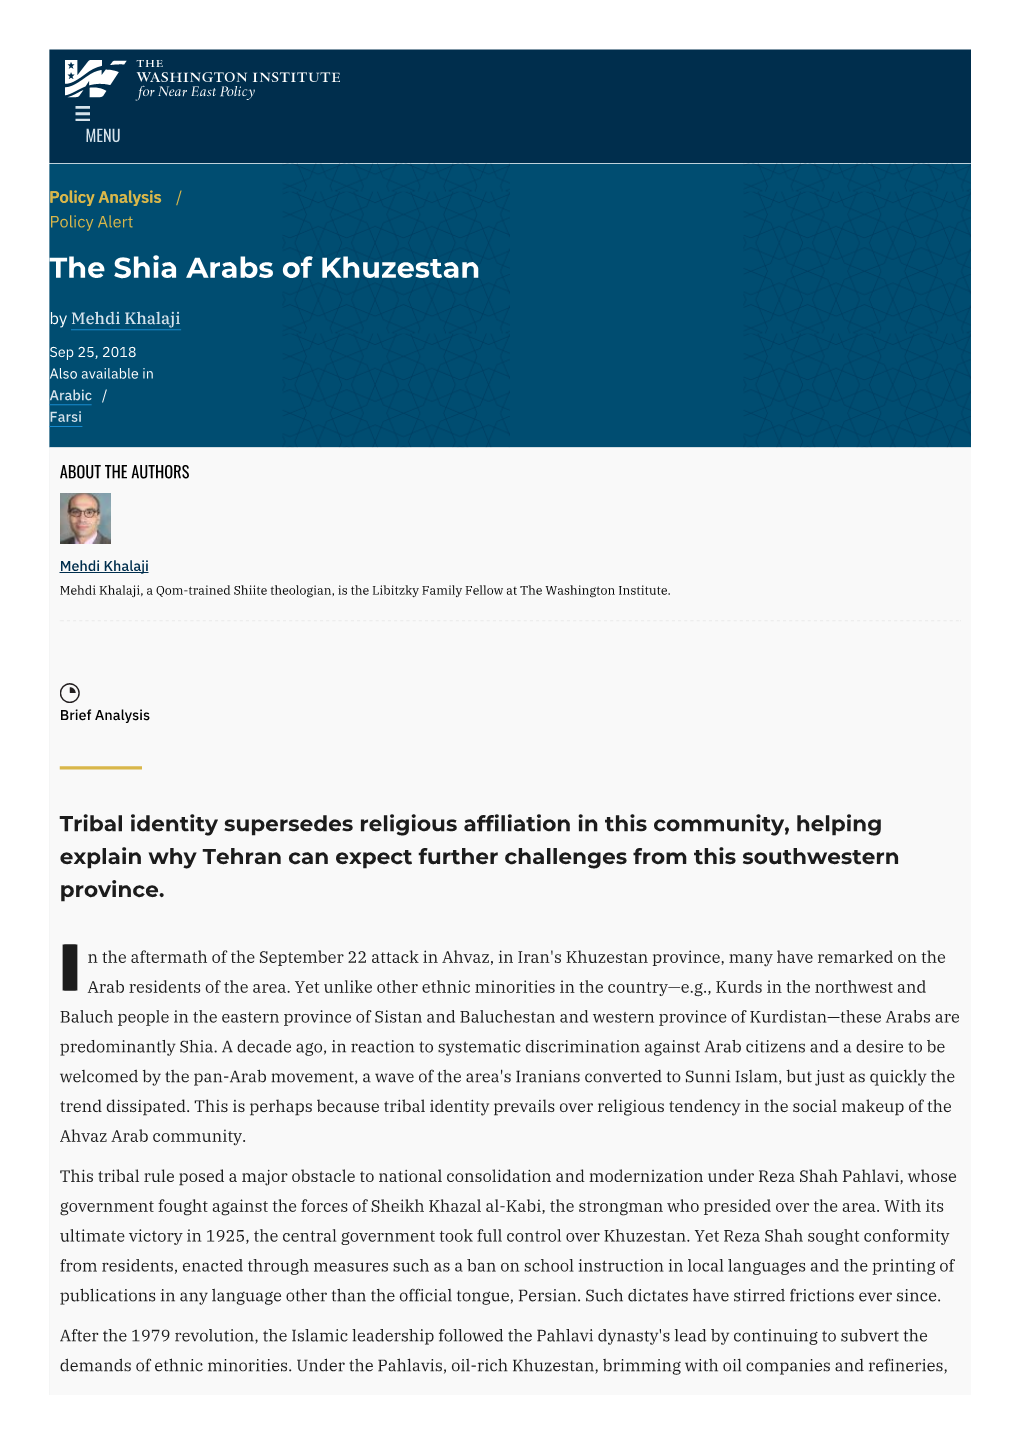 The Shia Arabs of Khuzestan | the Washington Institute